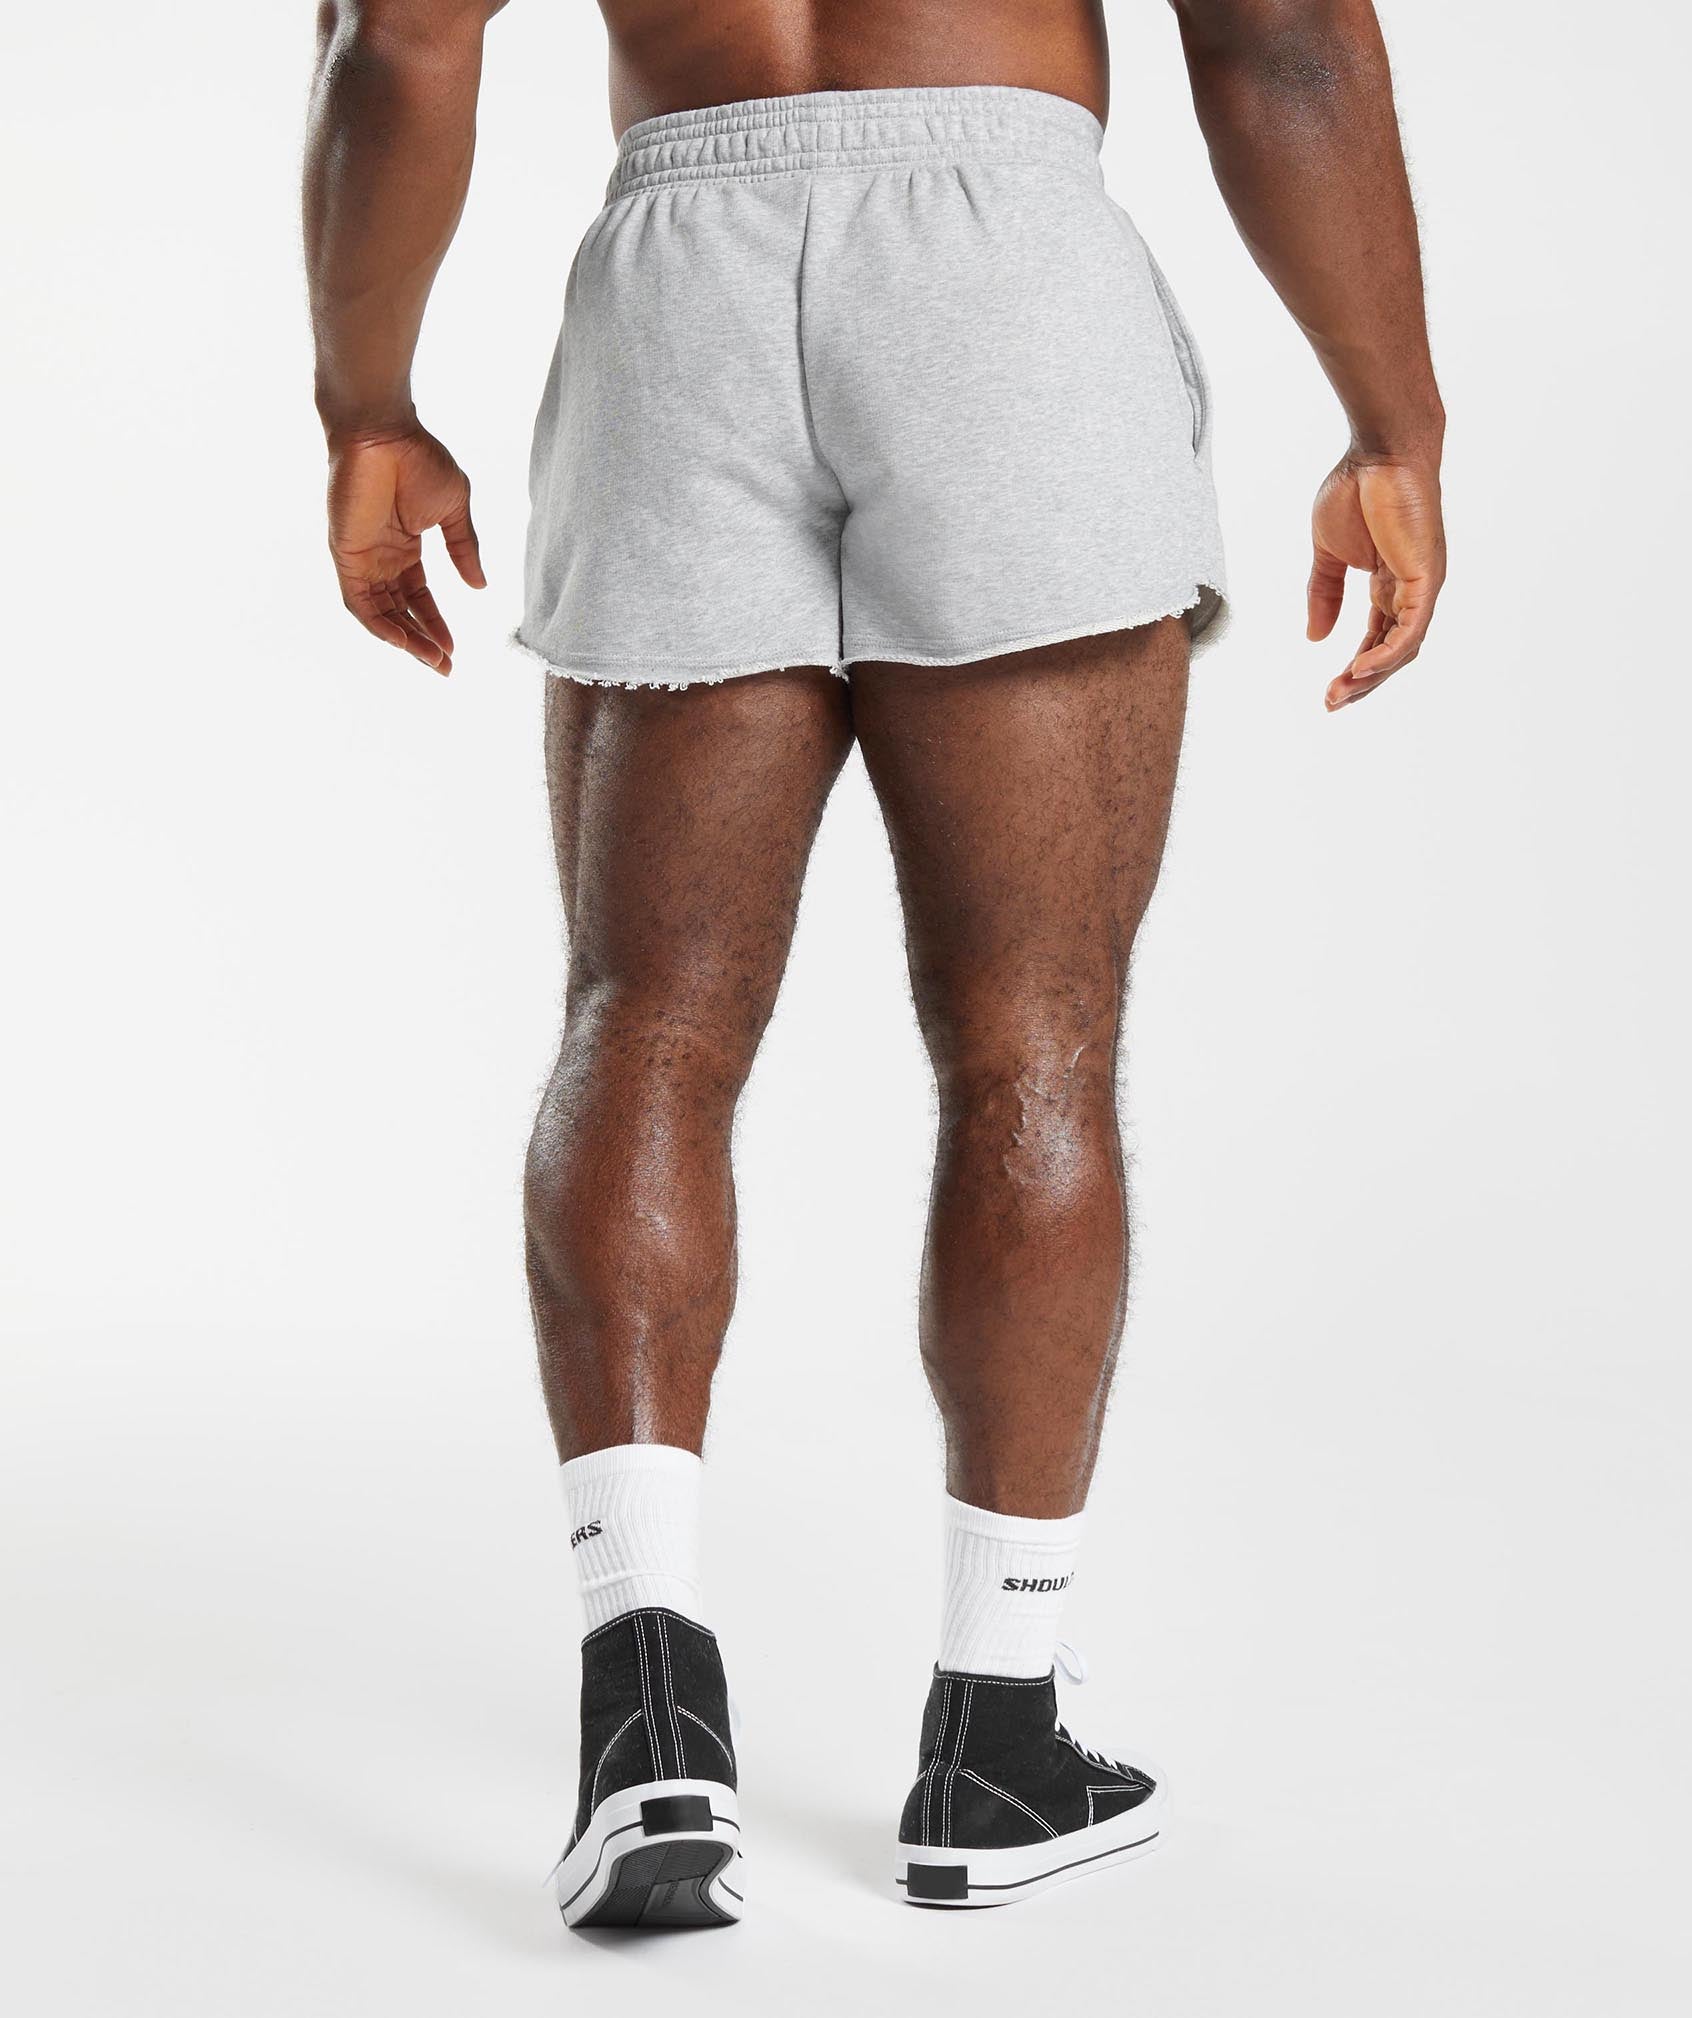 Men's Sweat Shorts & Jersey Shorts - Gymshark